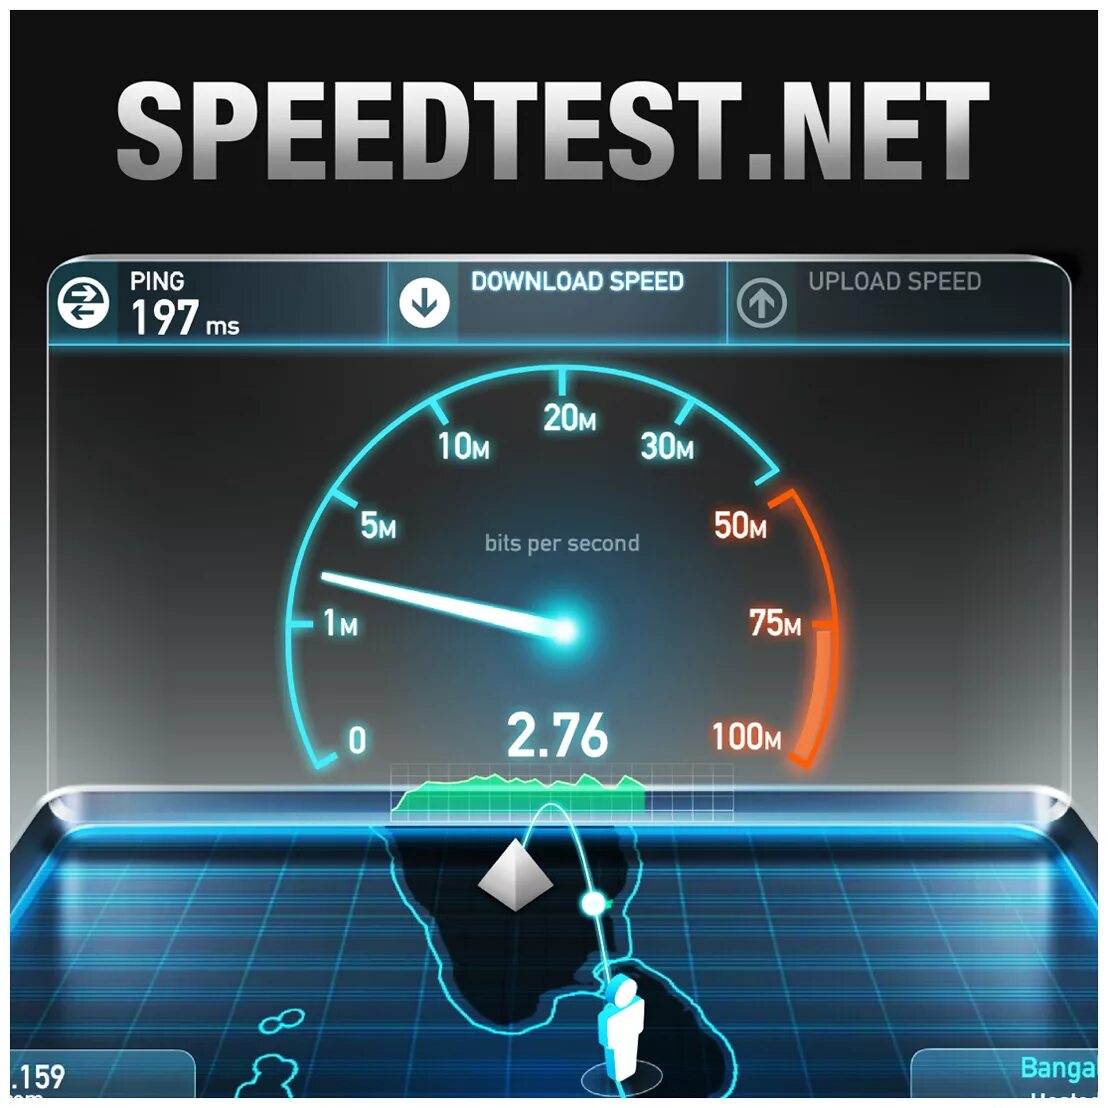 Test net ru. Спидтест. Тест скорости интернета. Speedtest.net. Спидтест скорости интернета.